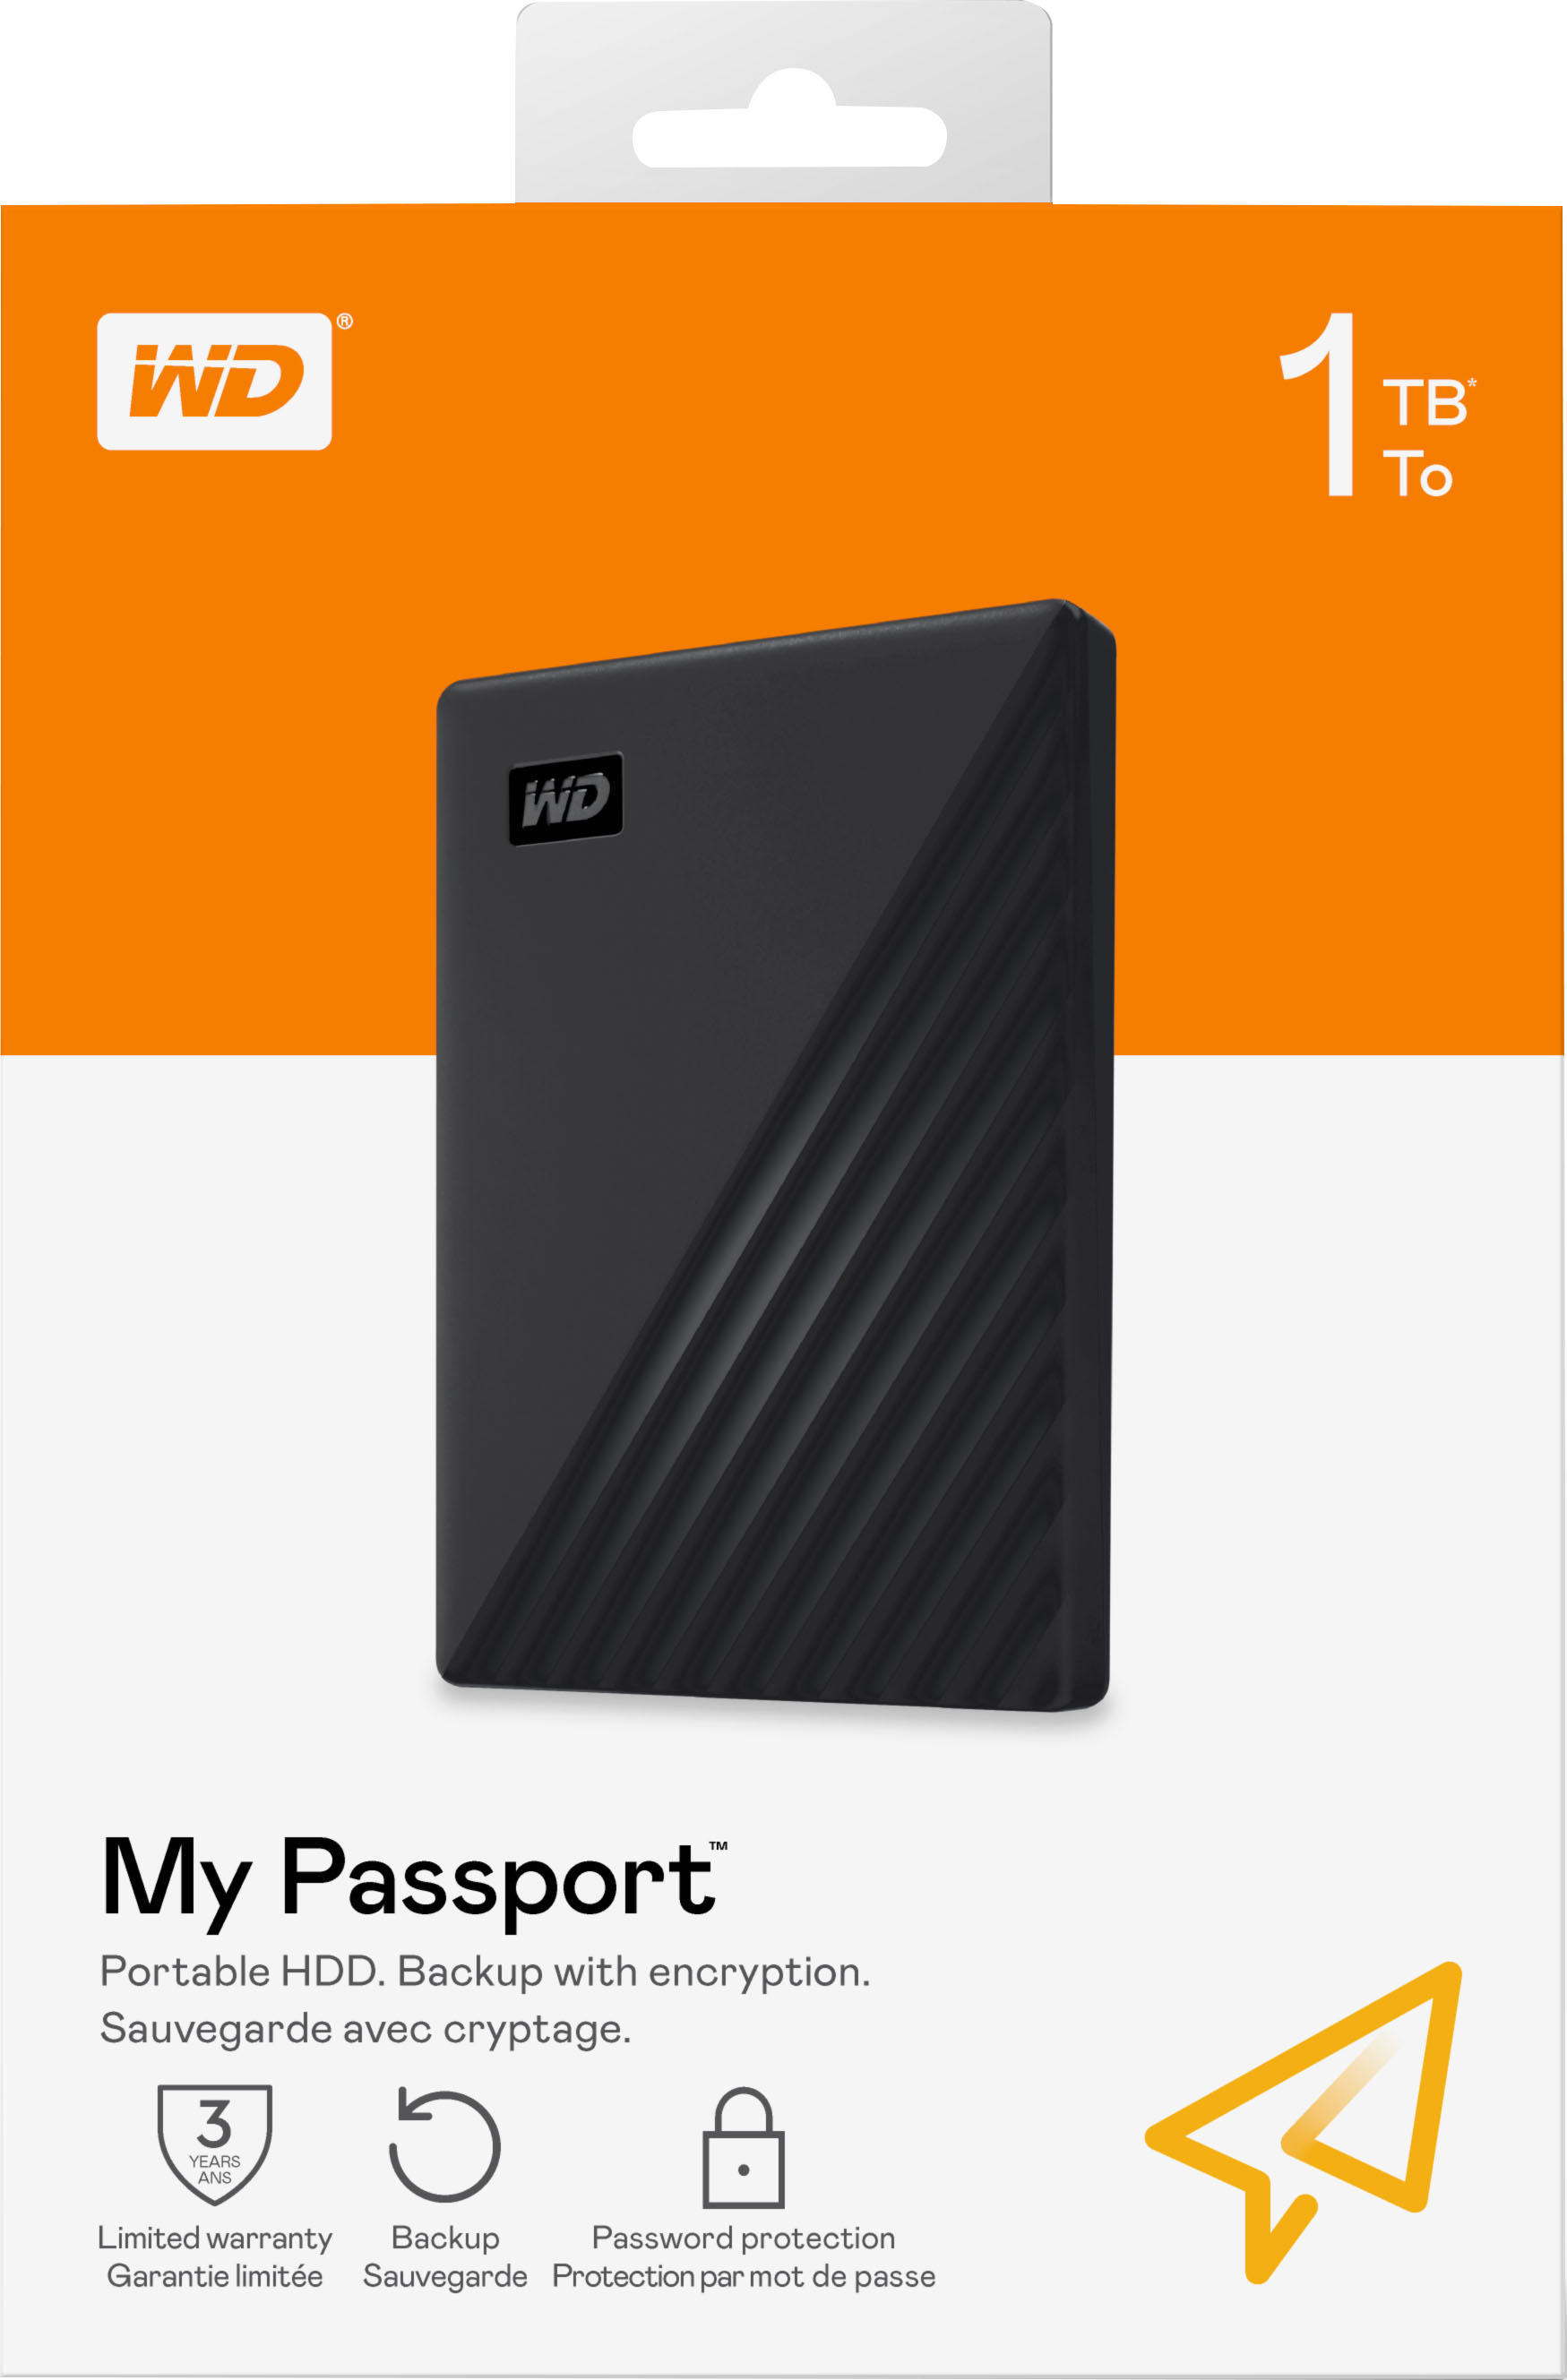 WD - My Passport 1TB External USB 3.0 Portable Hard Drive - Black